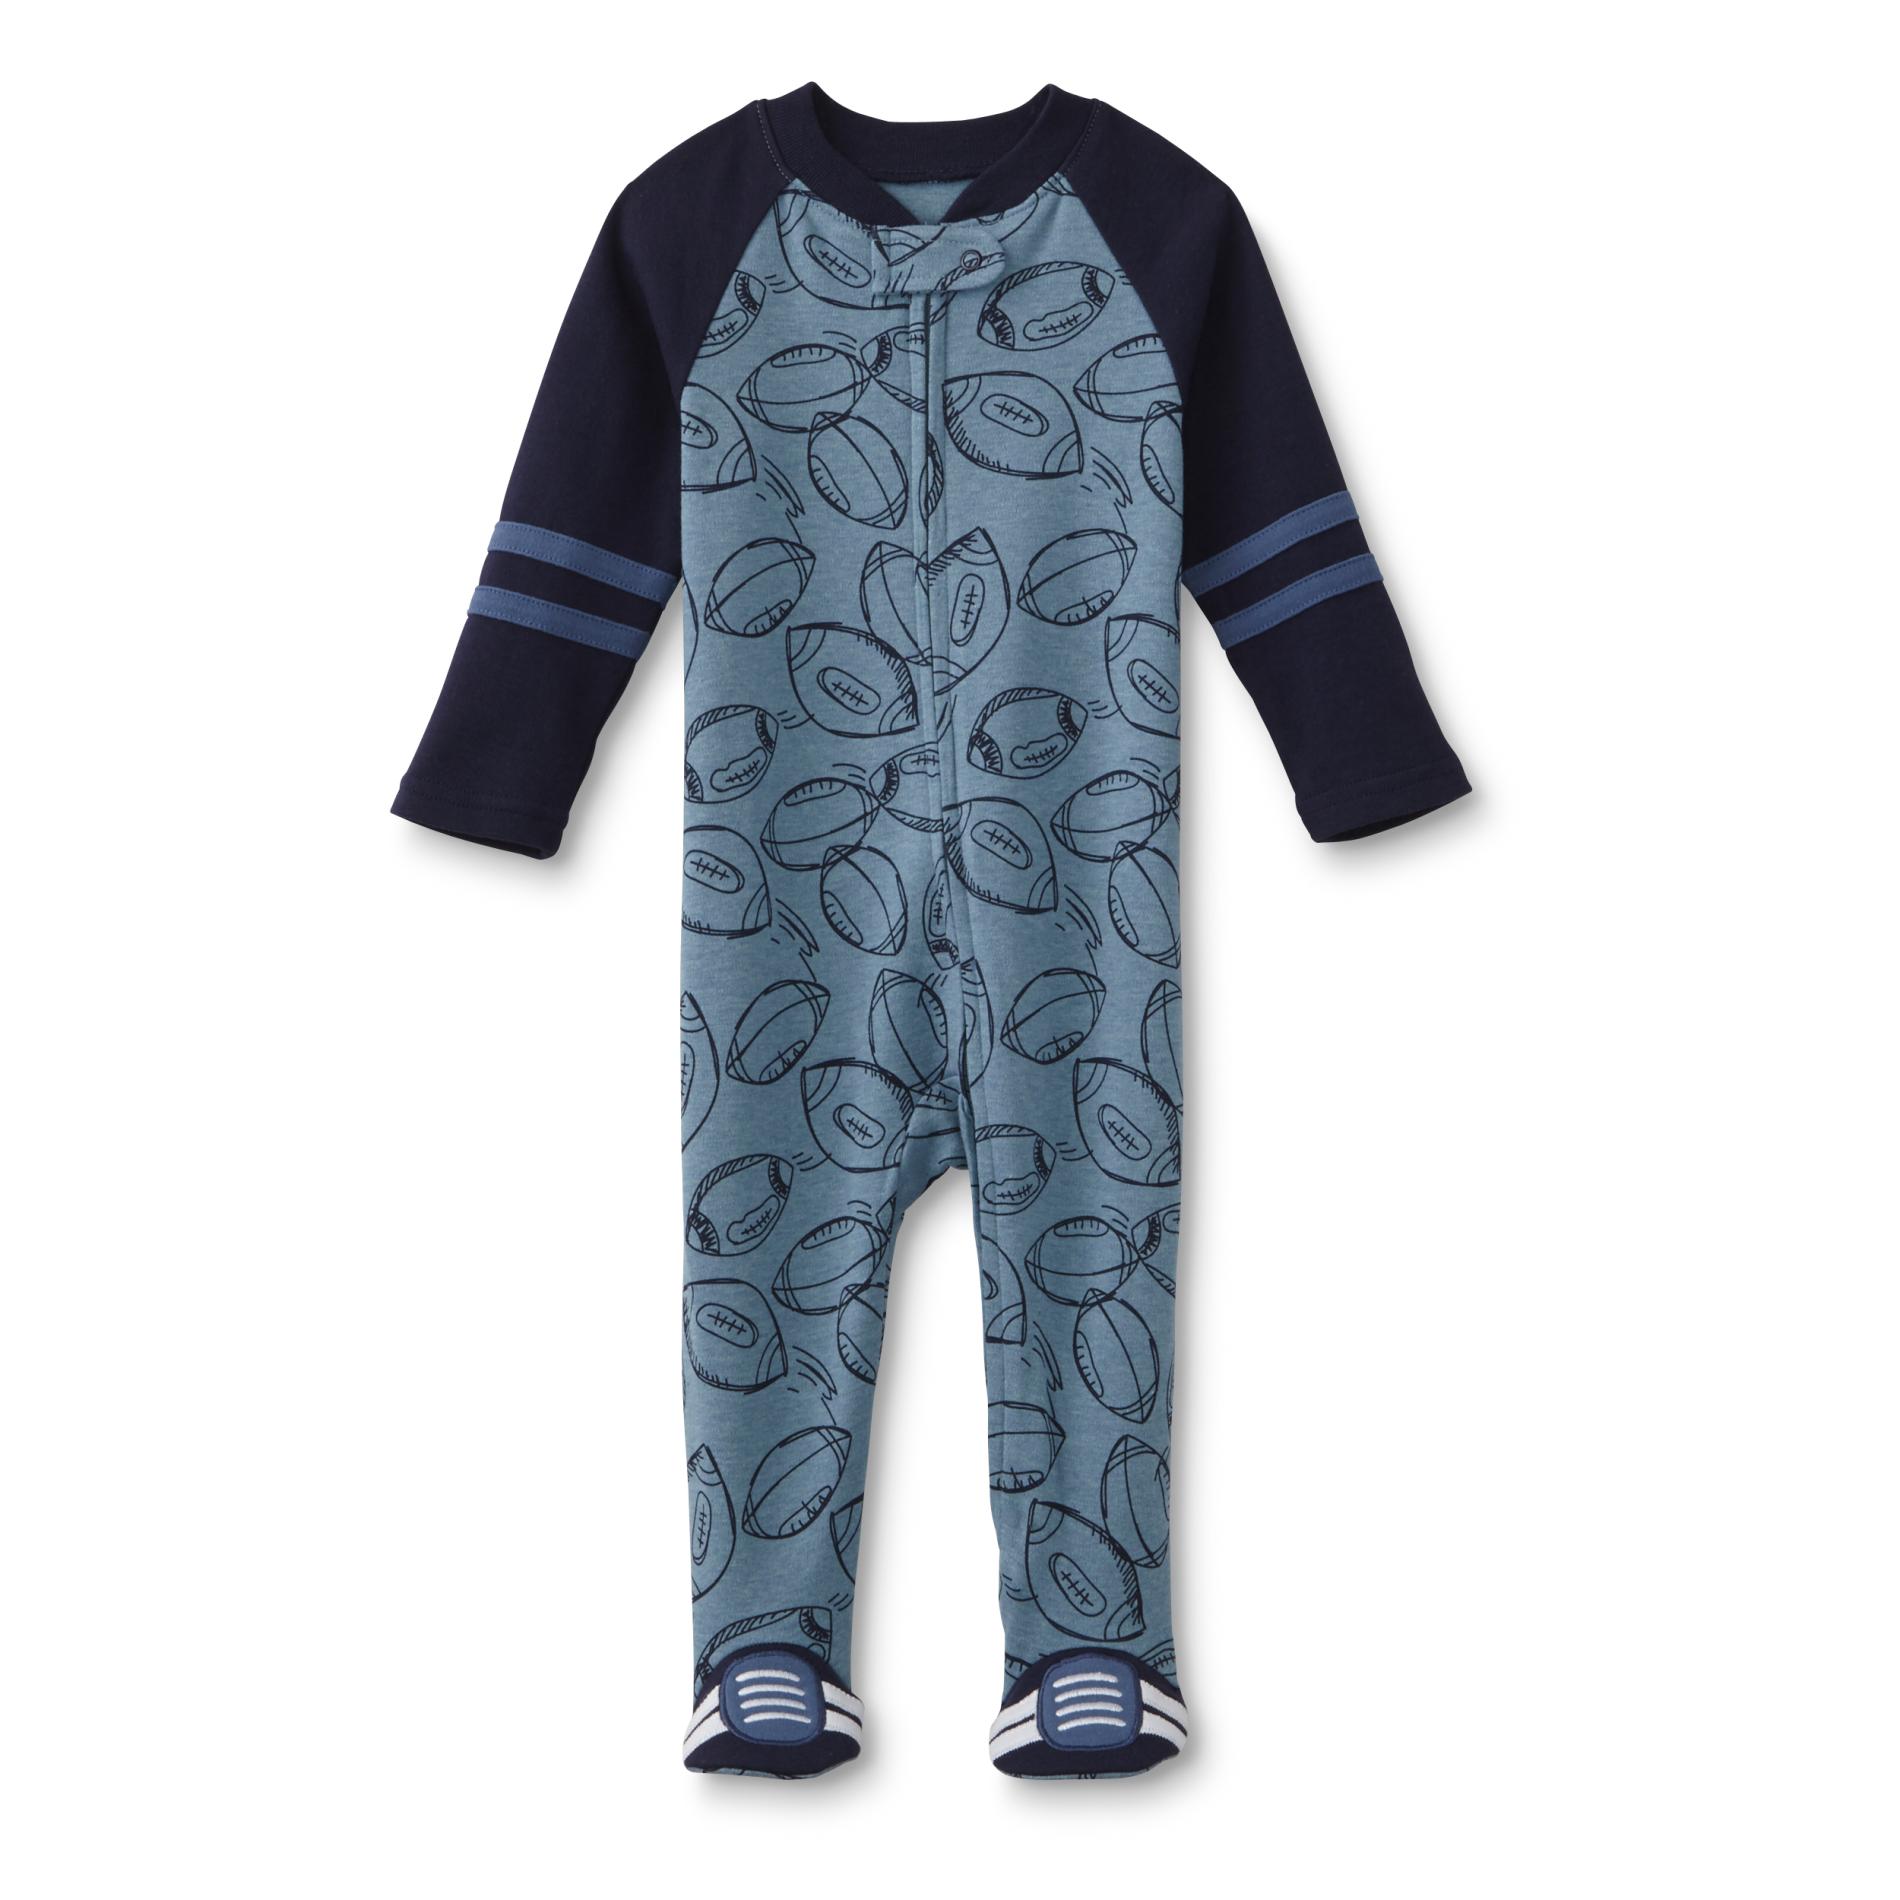 Little Wonders Newborn Boy's Sleeper Pajamas - Football